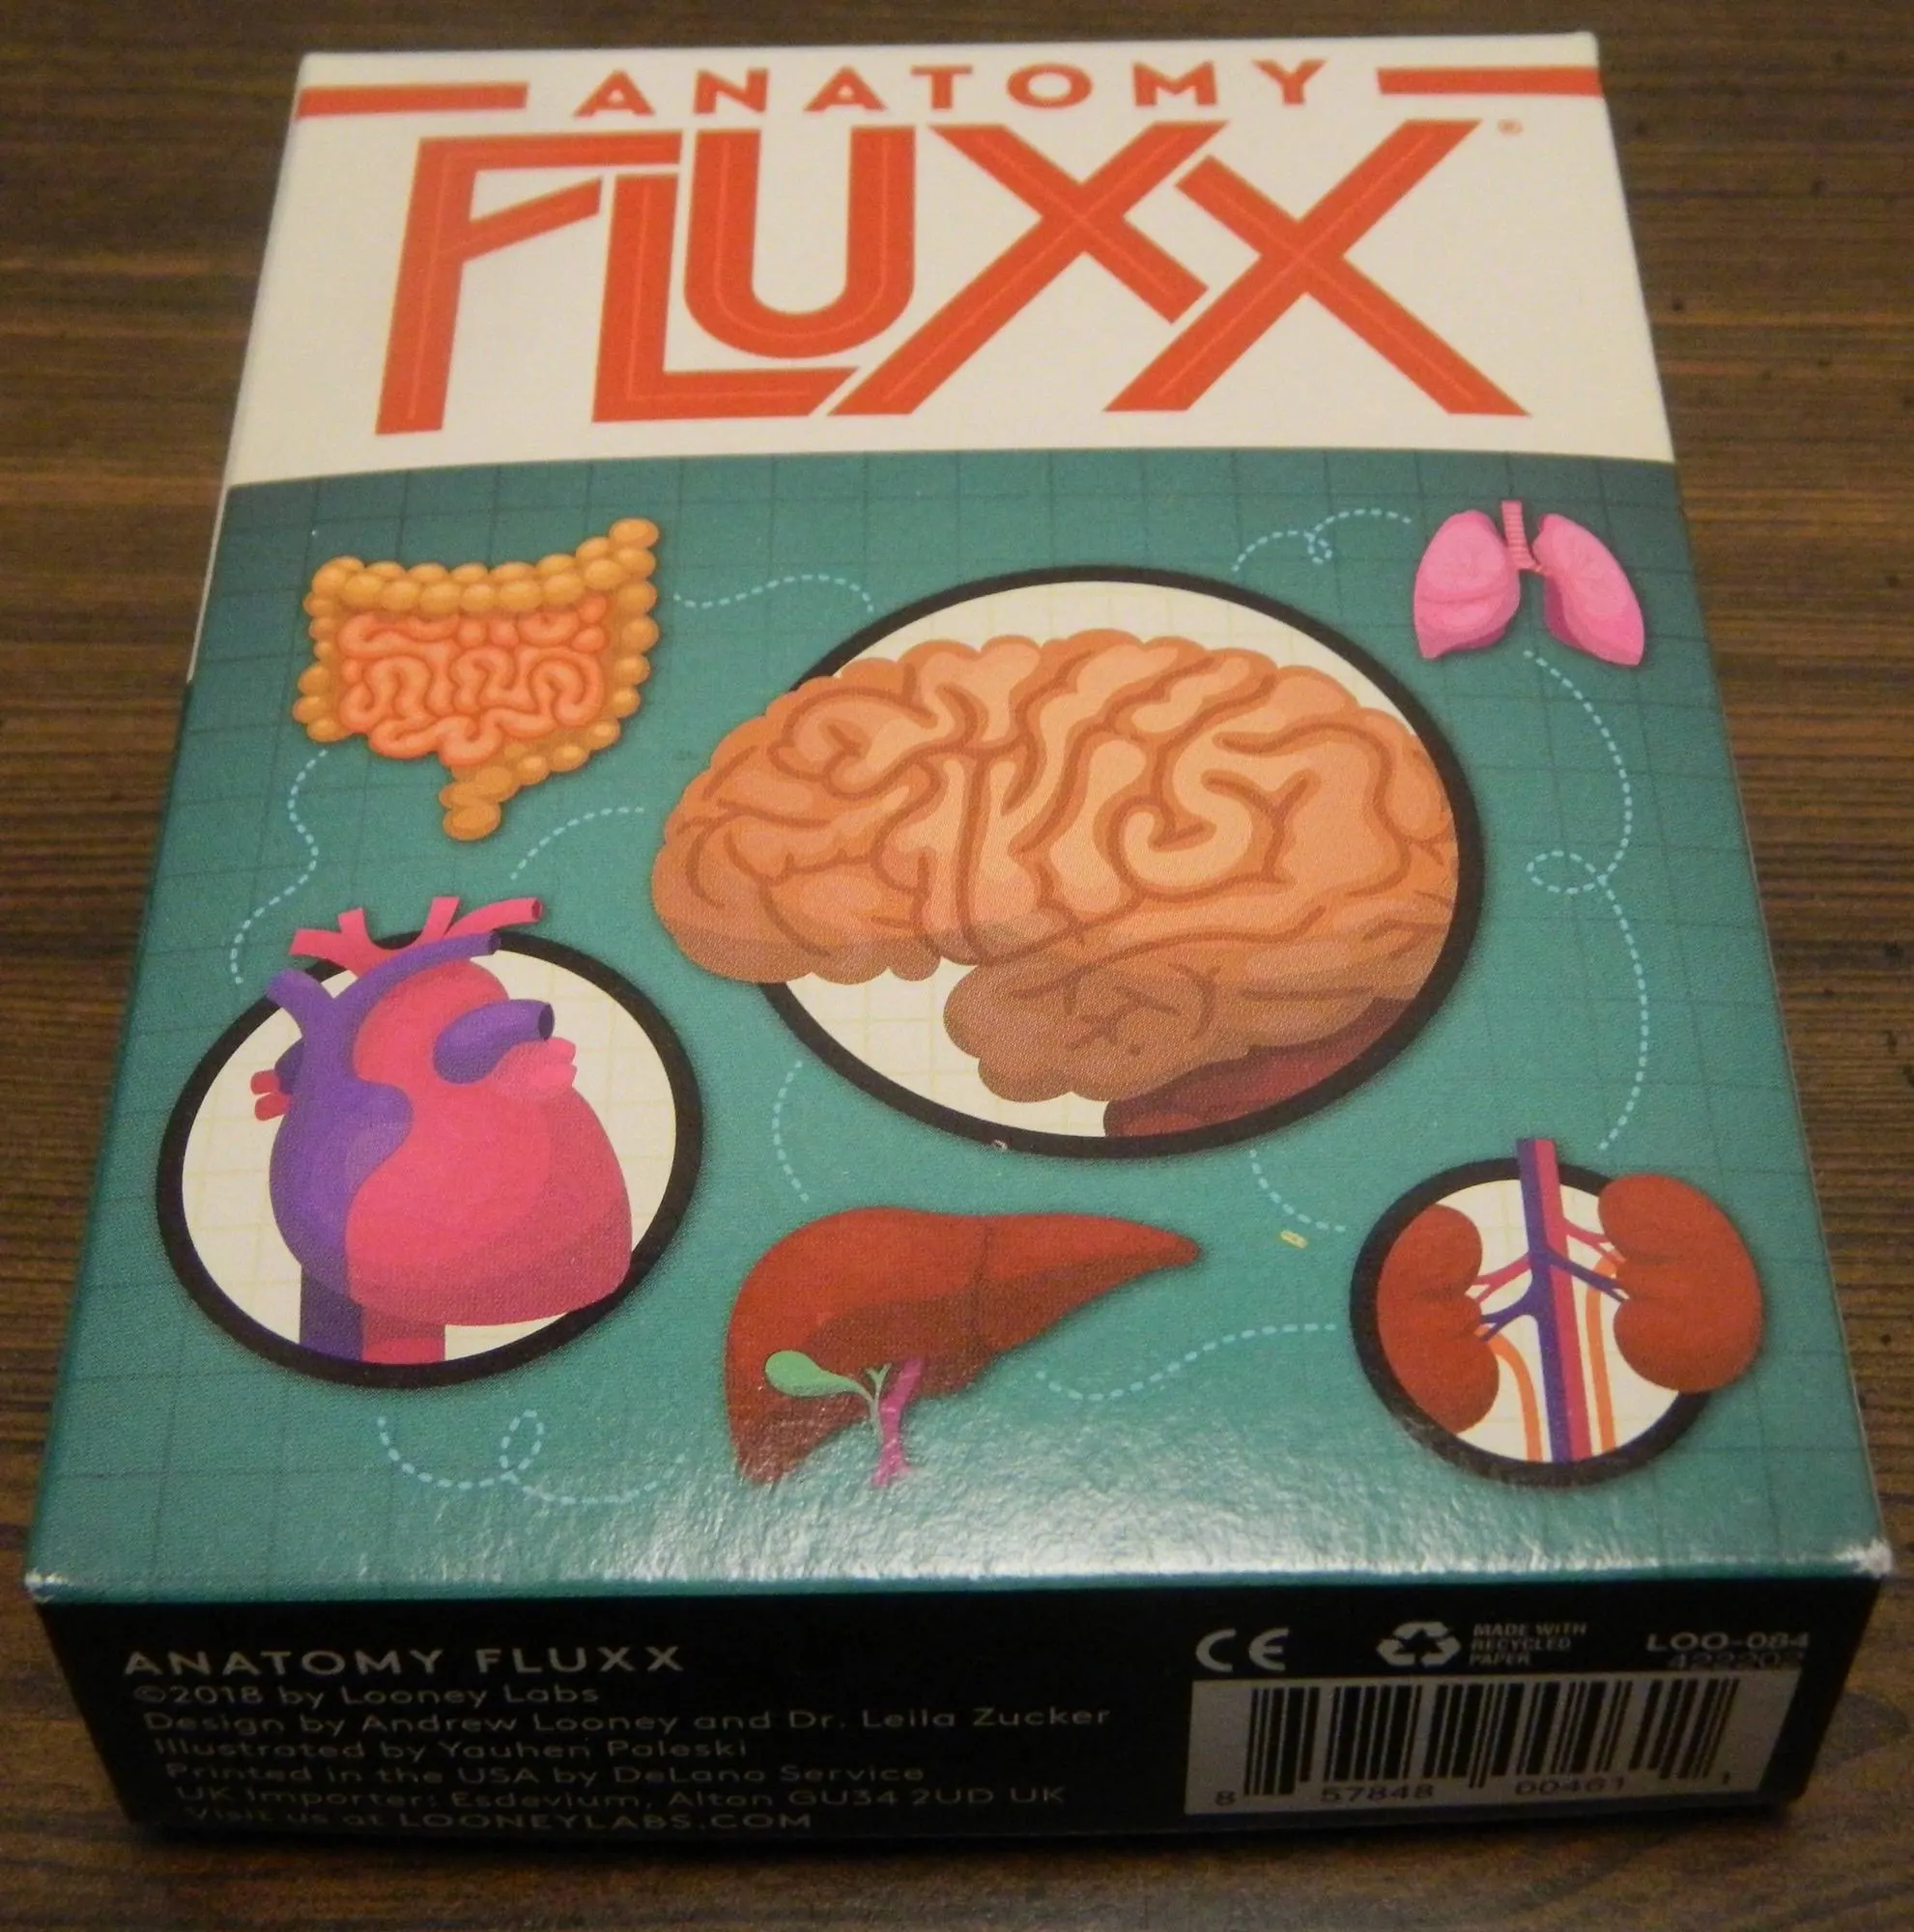 Box for Anatomy Fluxx